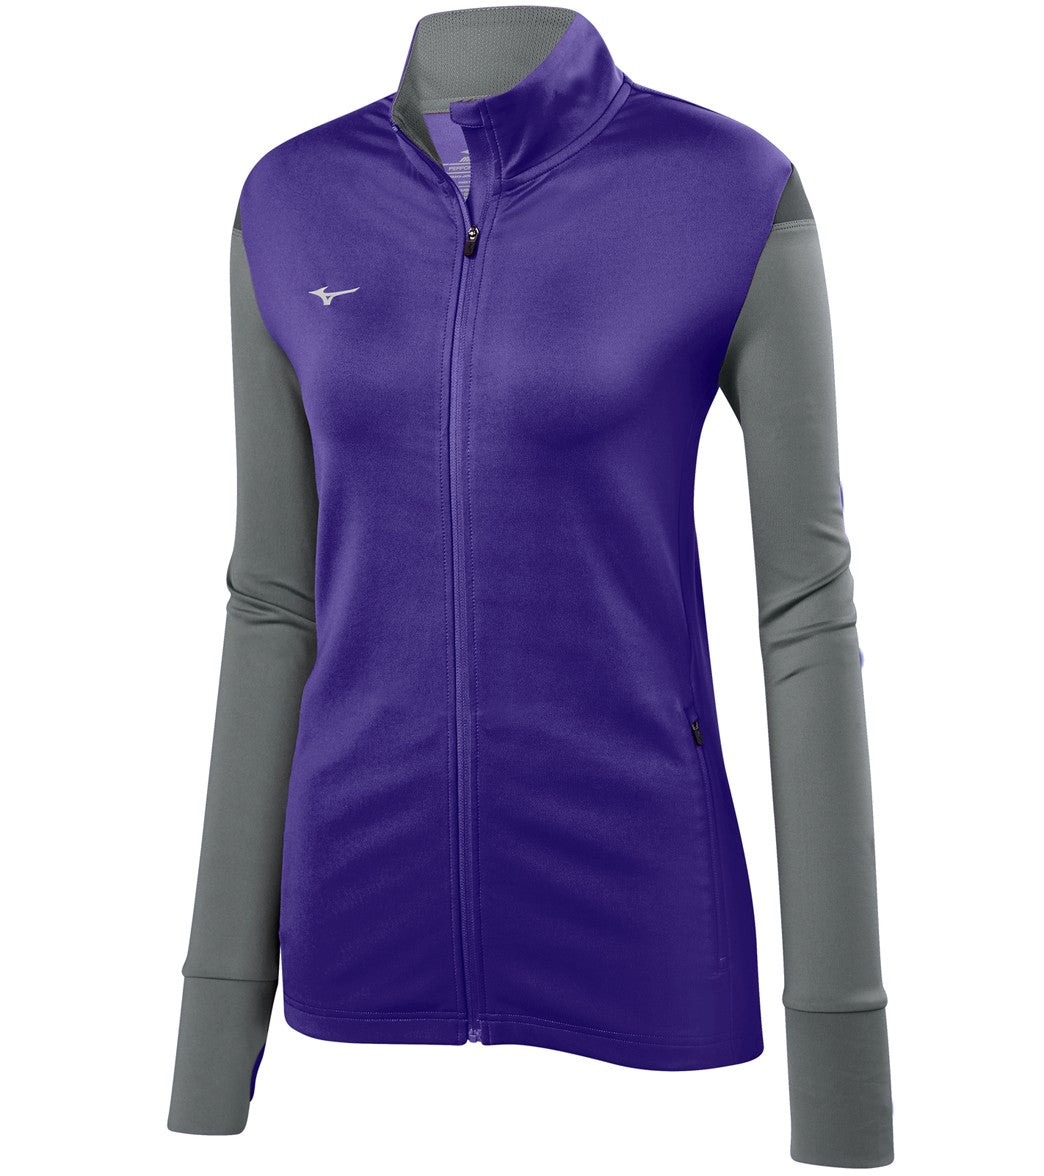 Mizuno Women's Horizon Full Zip Volleyball Jacket - Purple/Grey/Charcoal Large - Swimoutlet.com